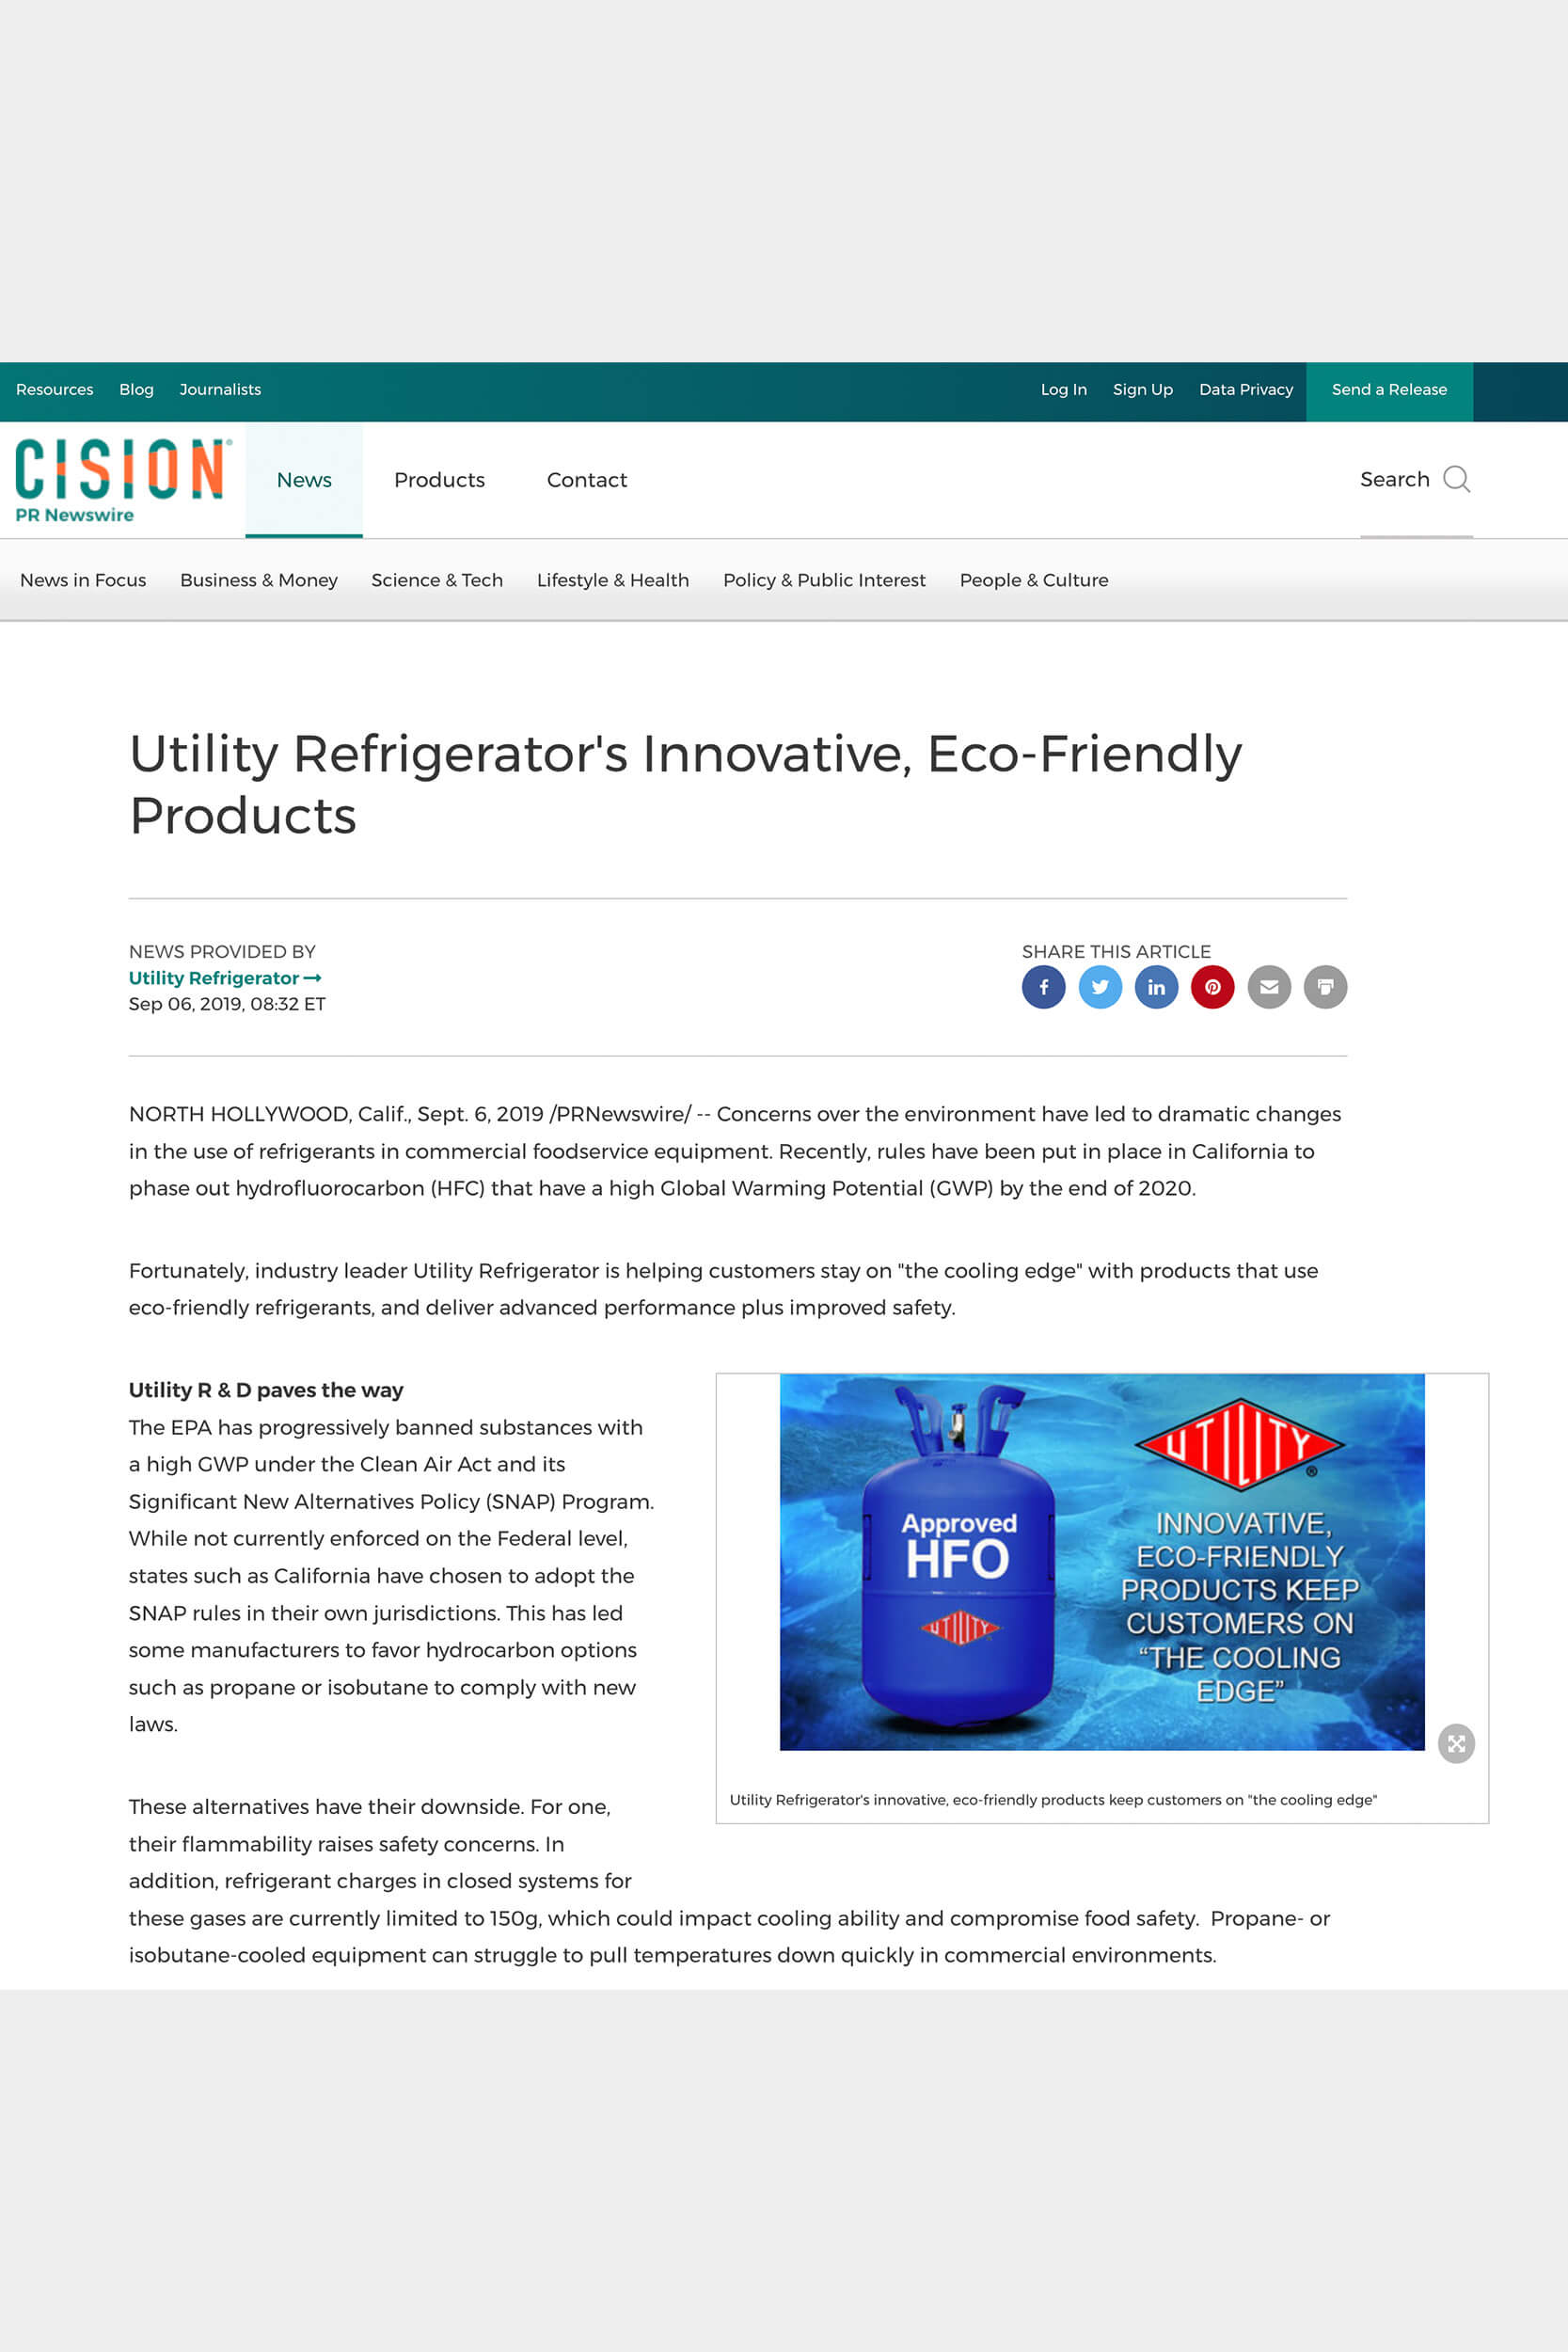 Utilty Refrigerator new eco-friendly refrigerants